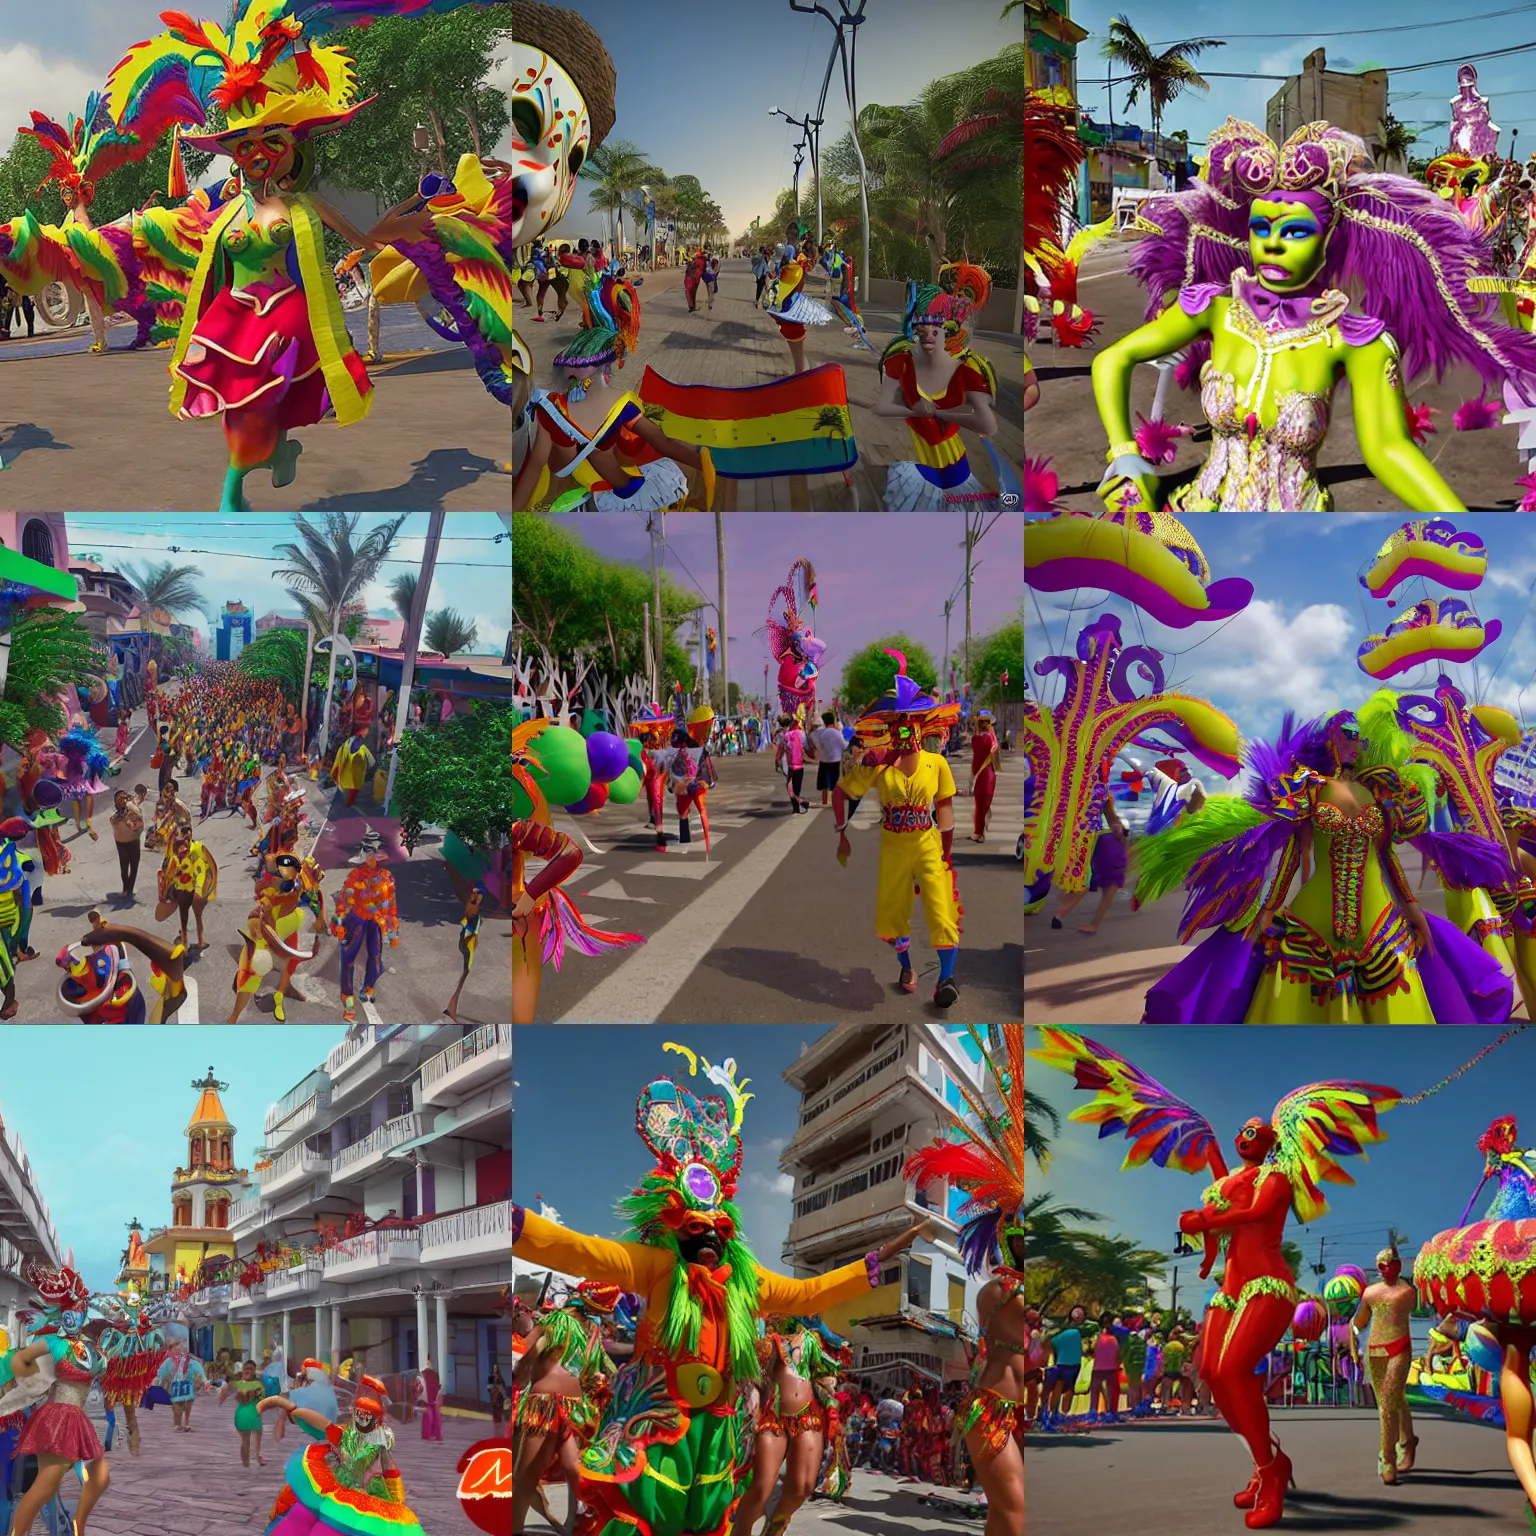 Prompt: carnaval de barranquilla, unreal engine